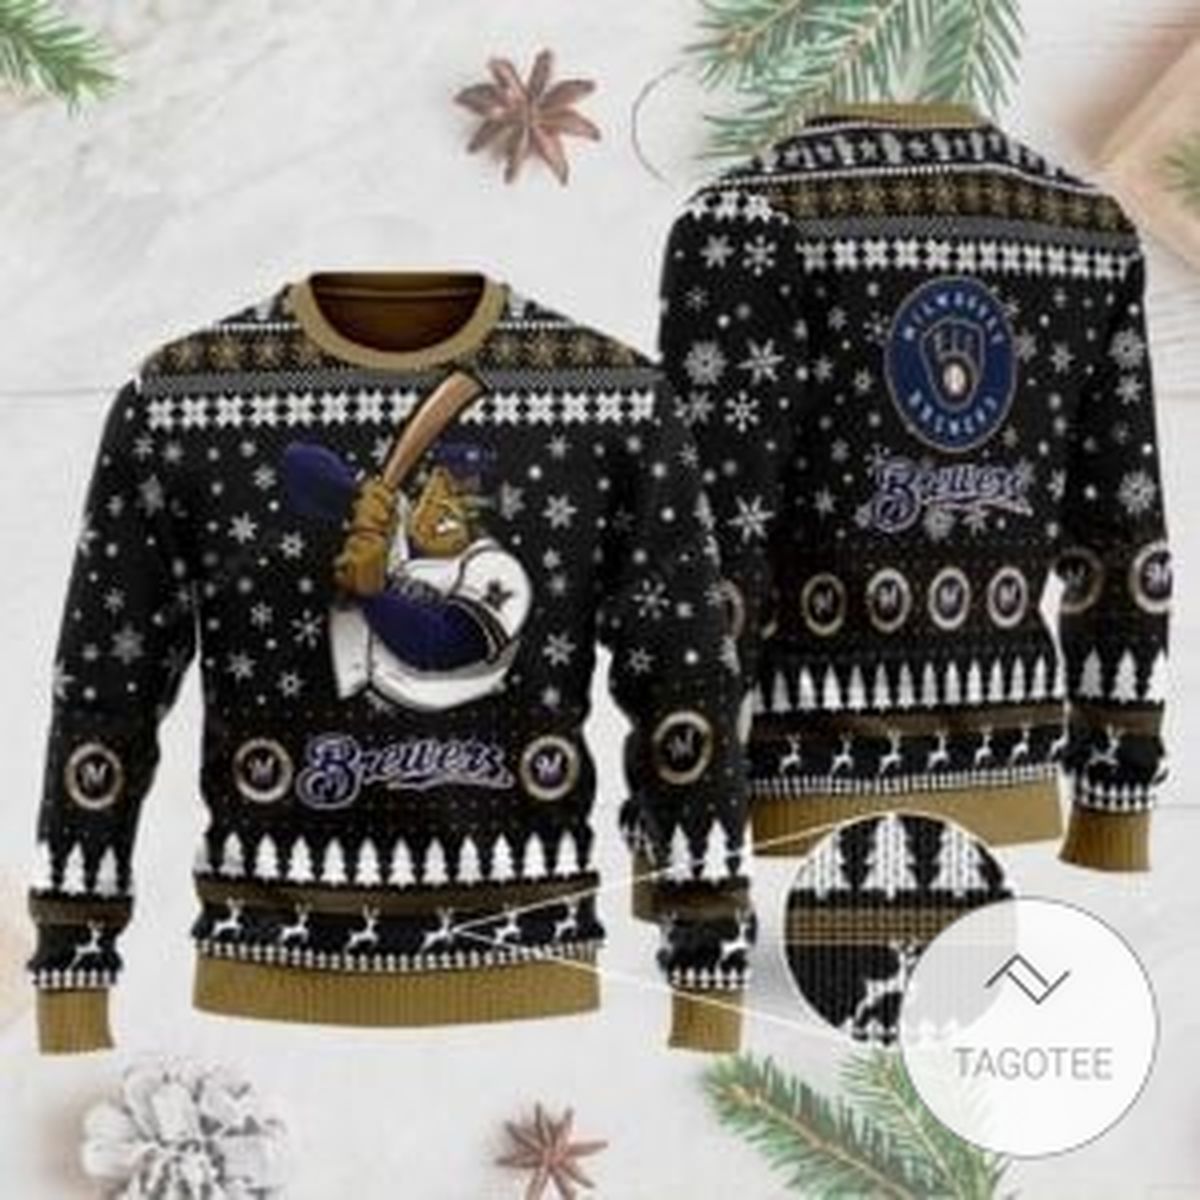 Milwaukee Brewers Sweatshirt Knitted Ugly Christmas Sweater